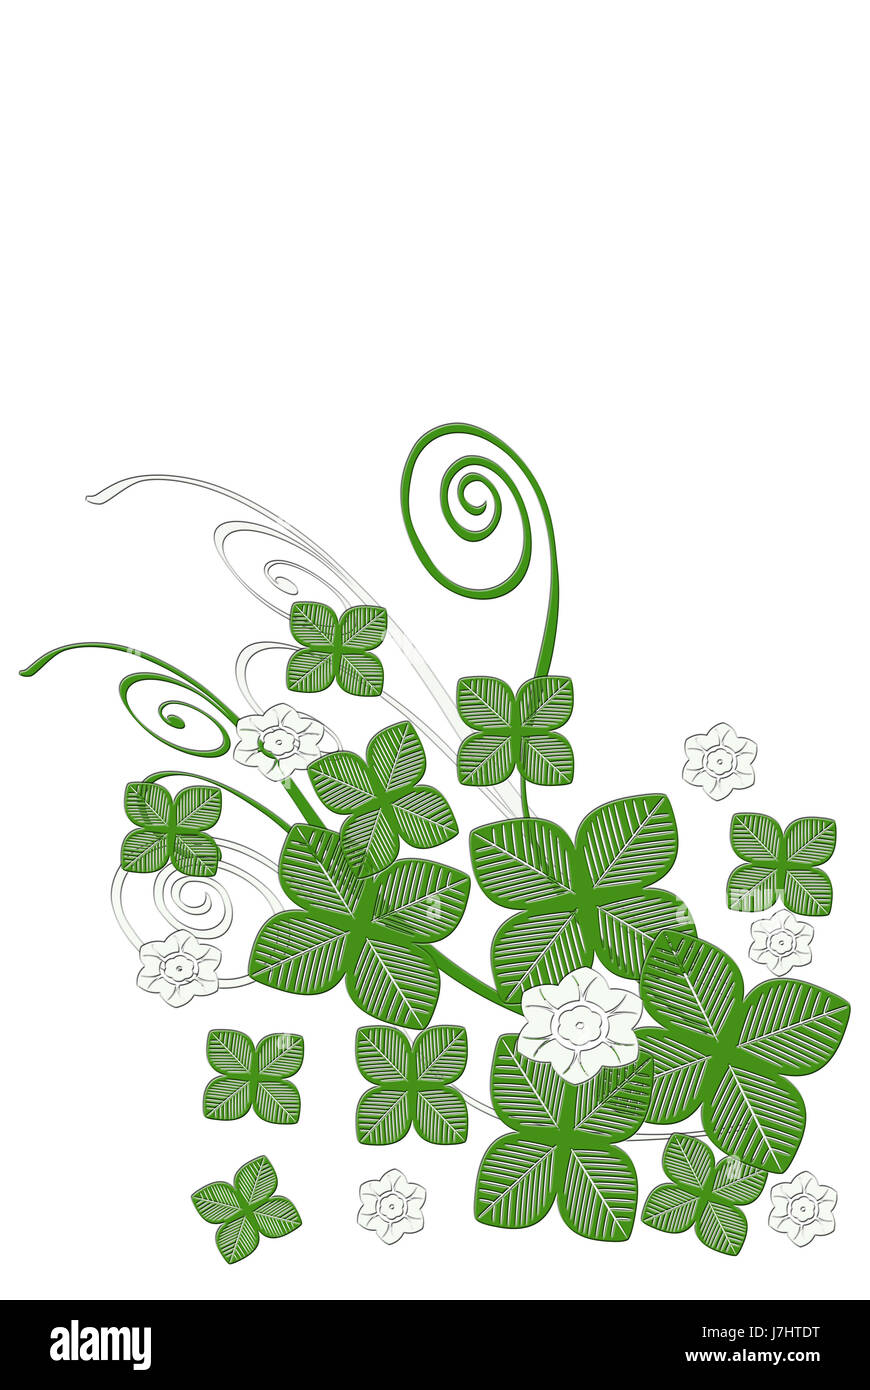 green clover cloverleaf shamrocks symbolic graphic green flower flowers plant Stock Photo